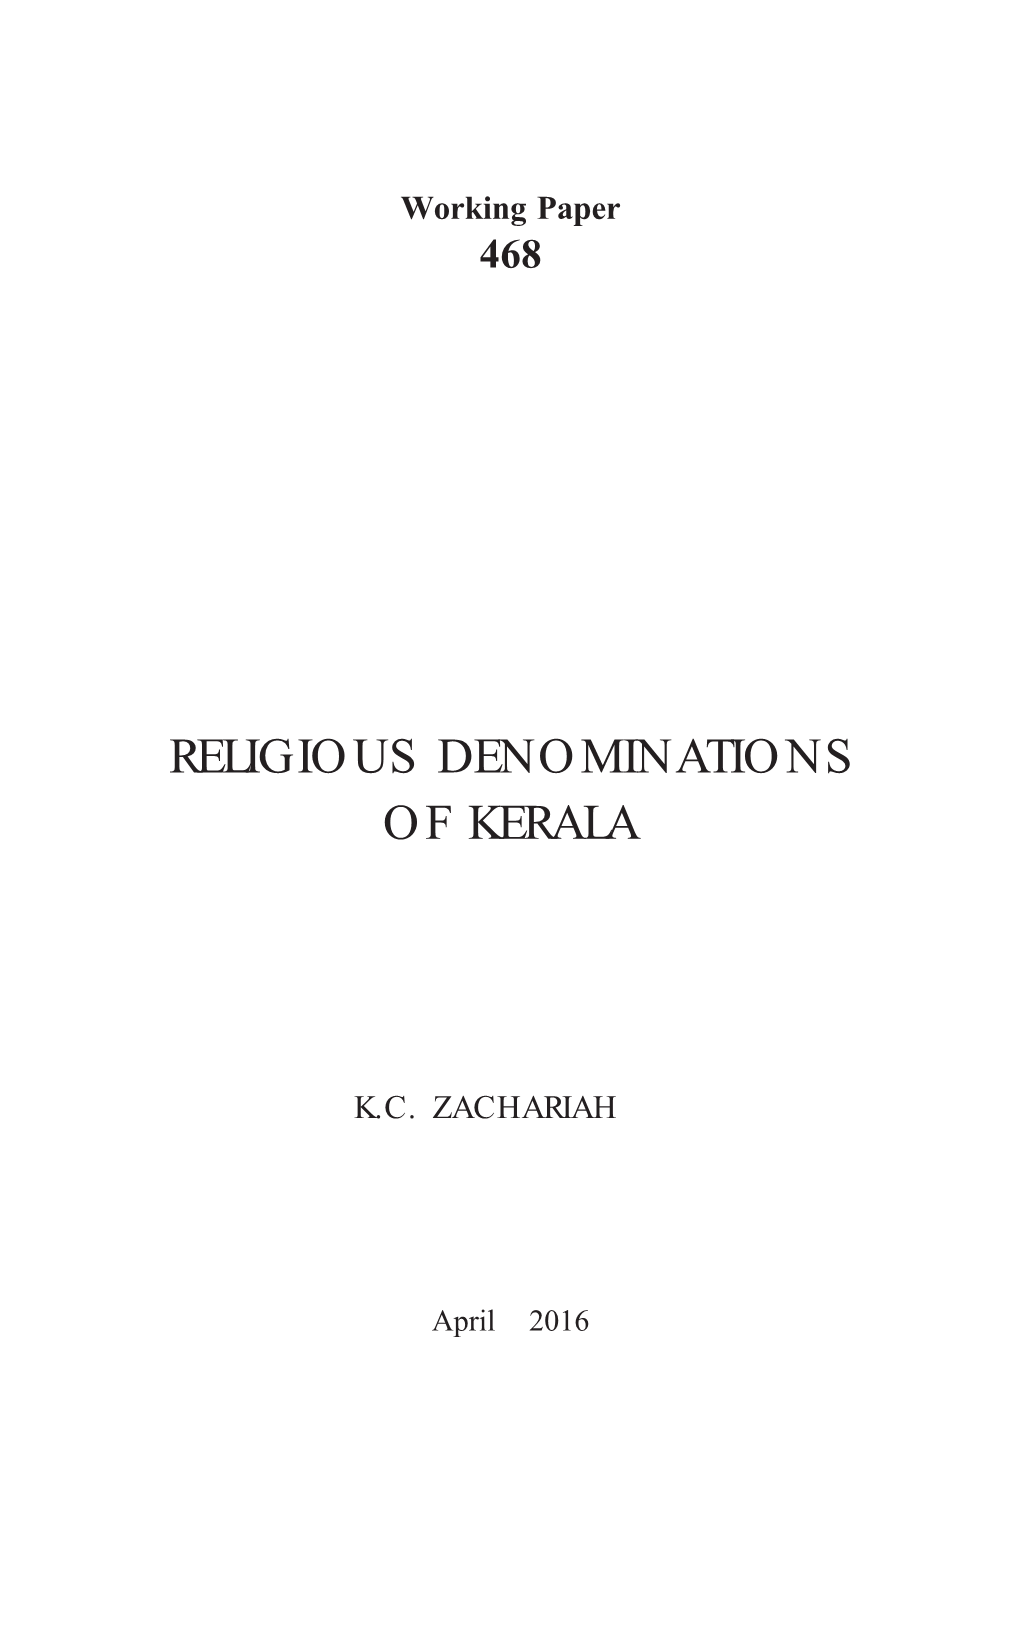 Religious Denominations of Kerala